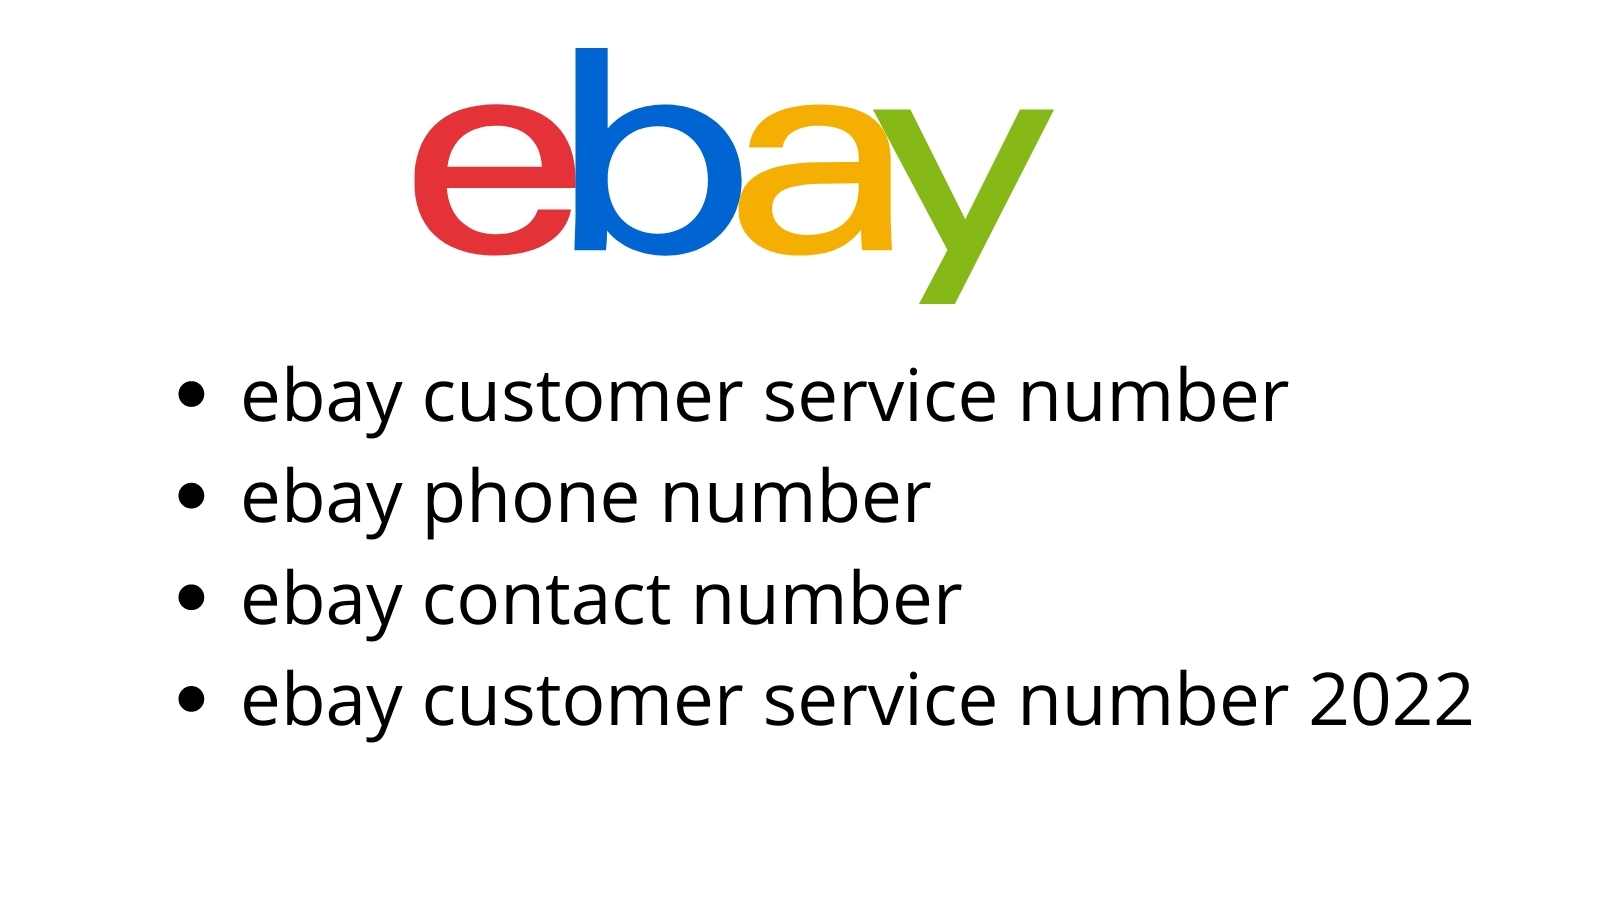 Ebay customer service number 2022